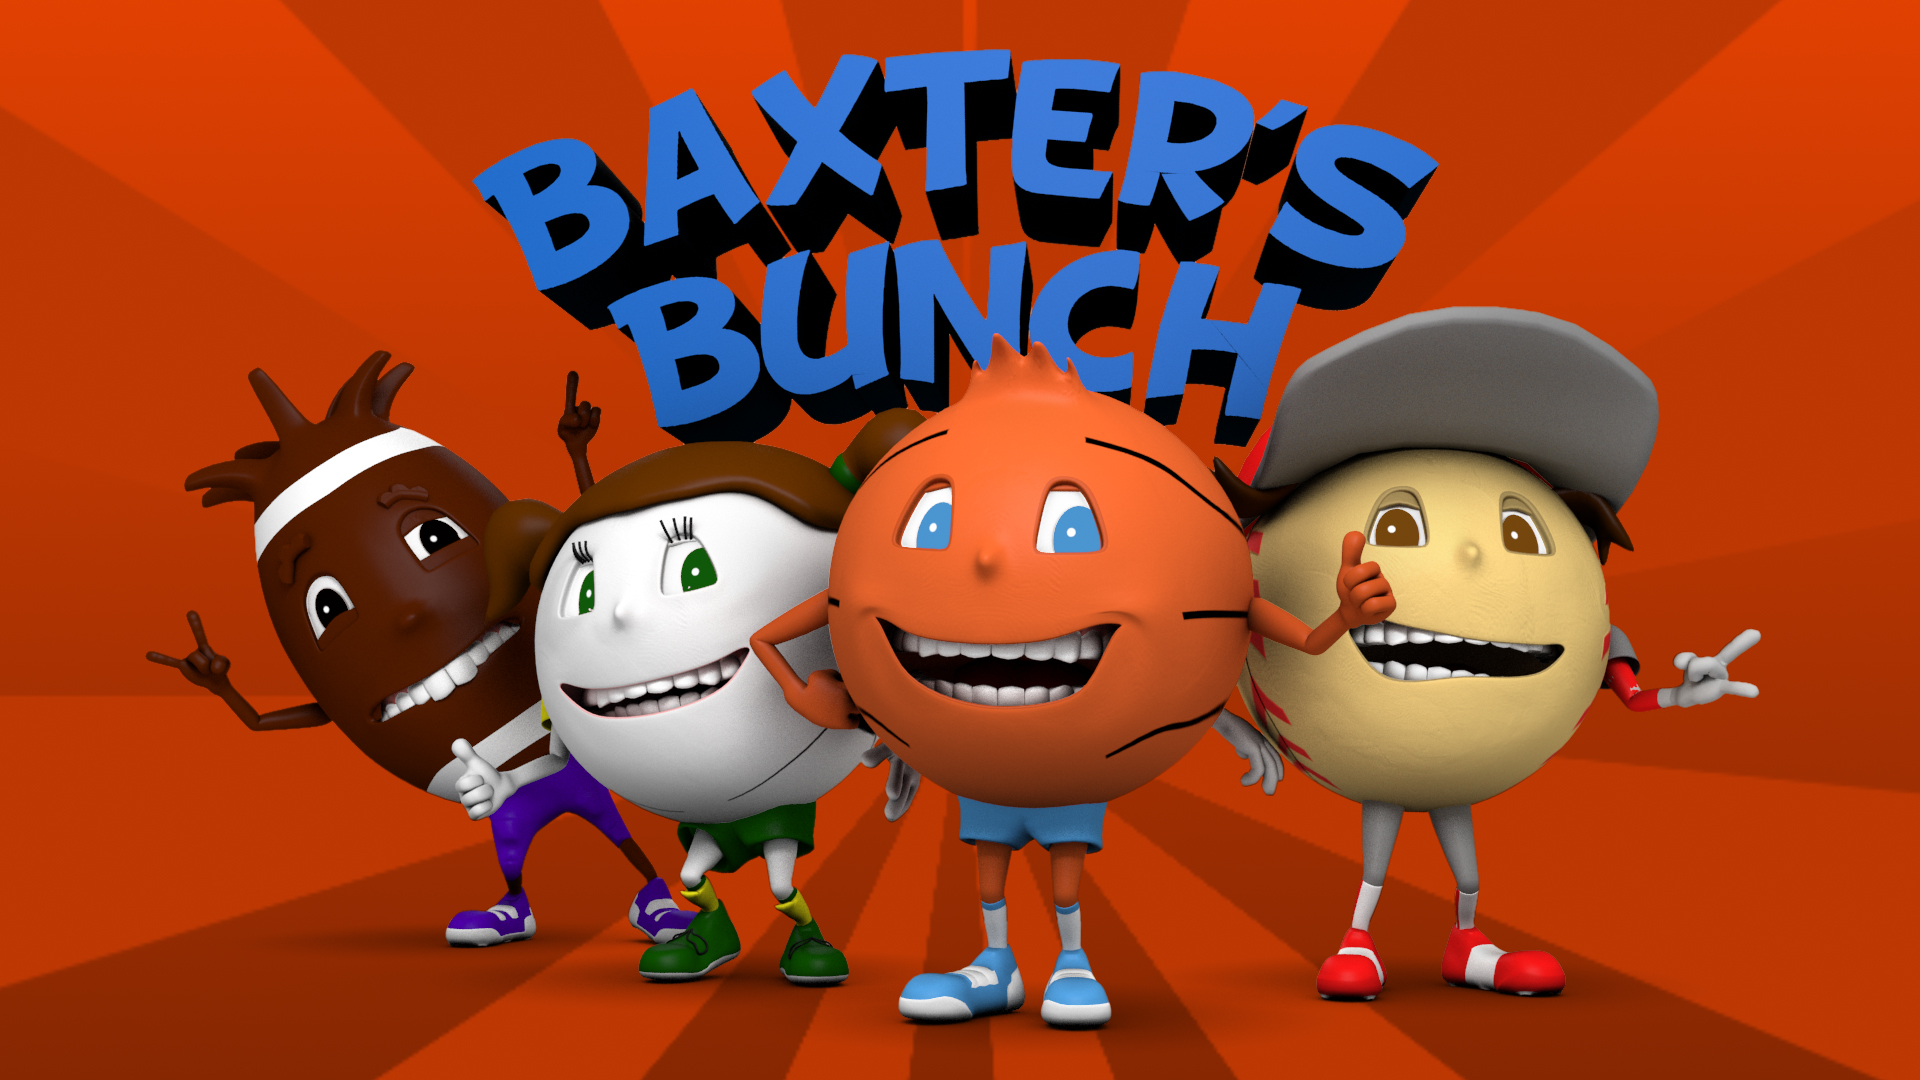 Baxters Bunch TV Show Pilot